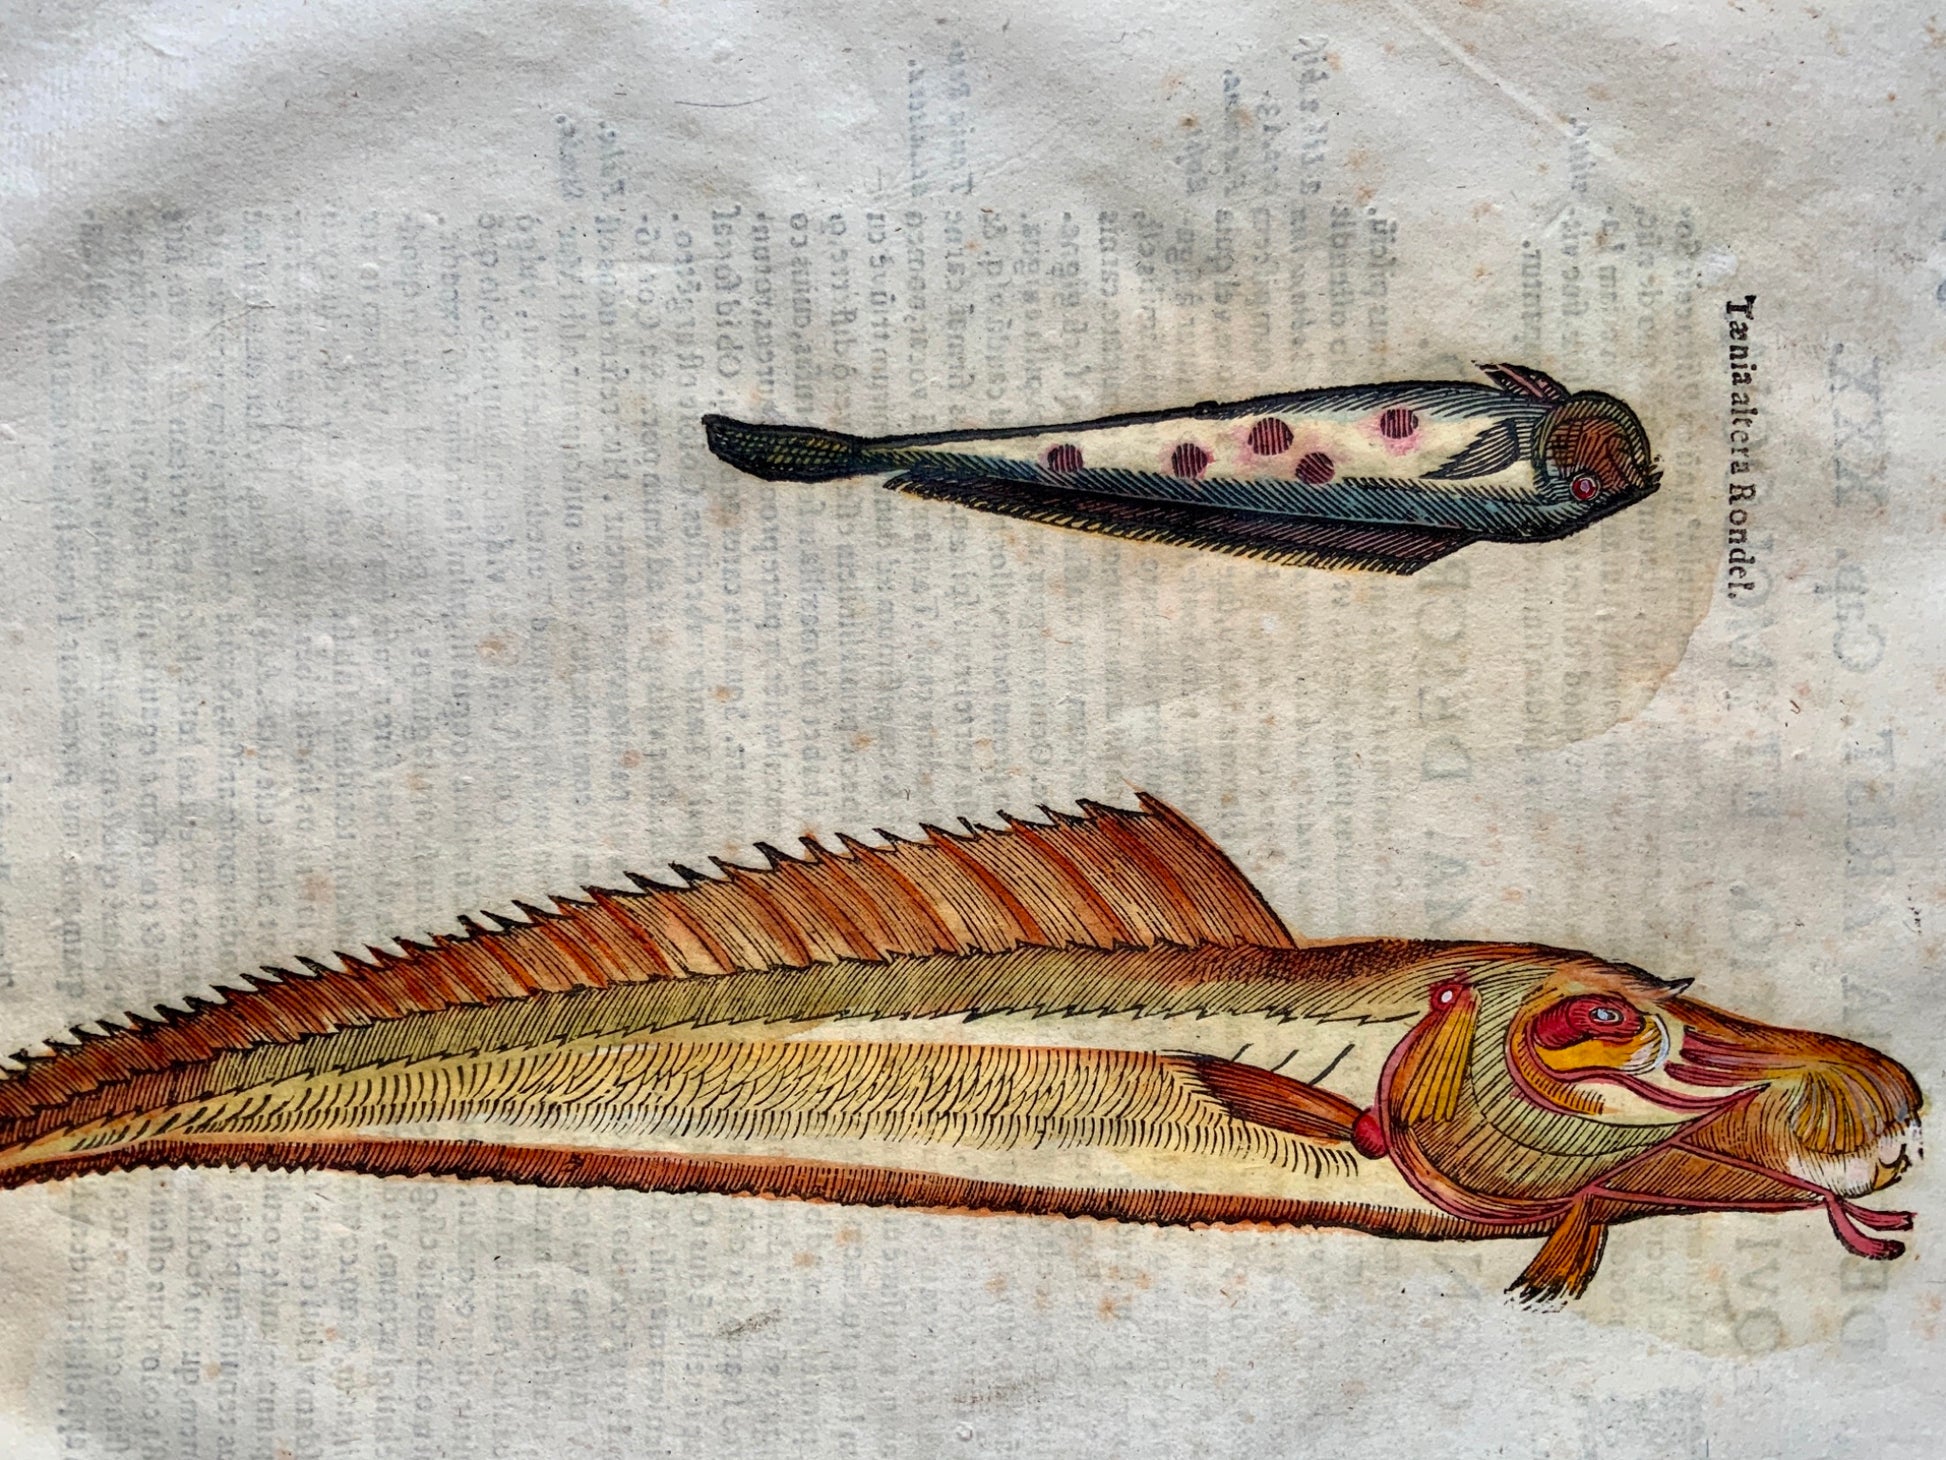 Coriolano; Aldrovandi - Large folio woodcut leaf - Fish: LOACH - Handcol - 1638